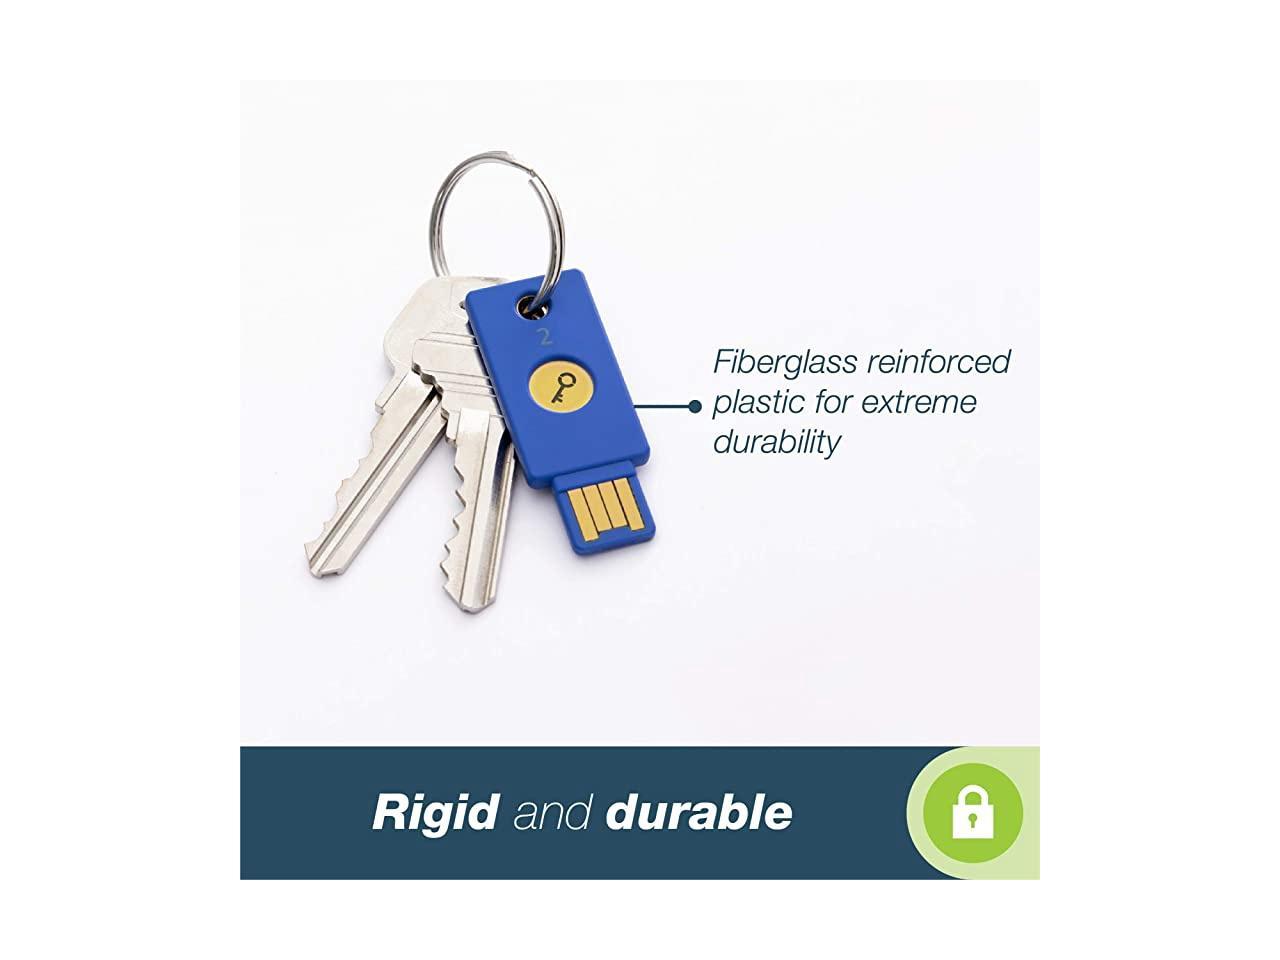 usb security key fido certified